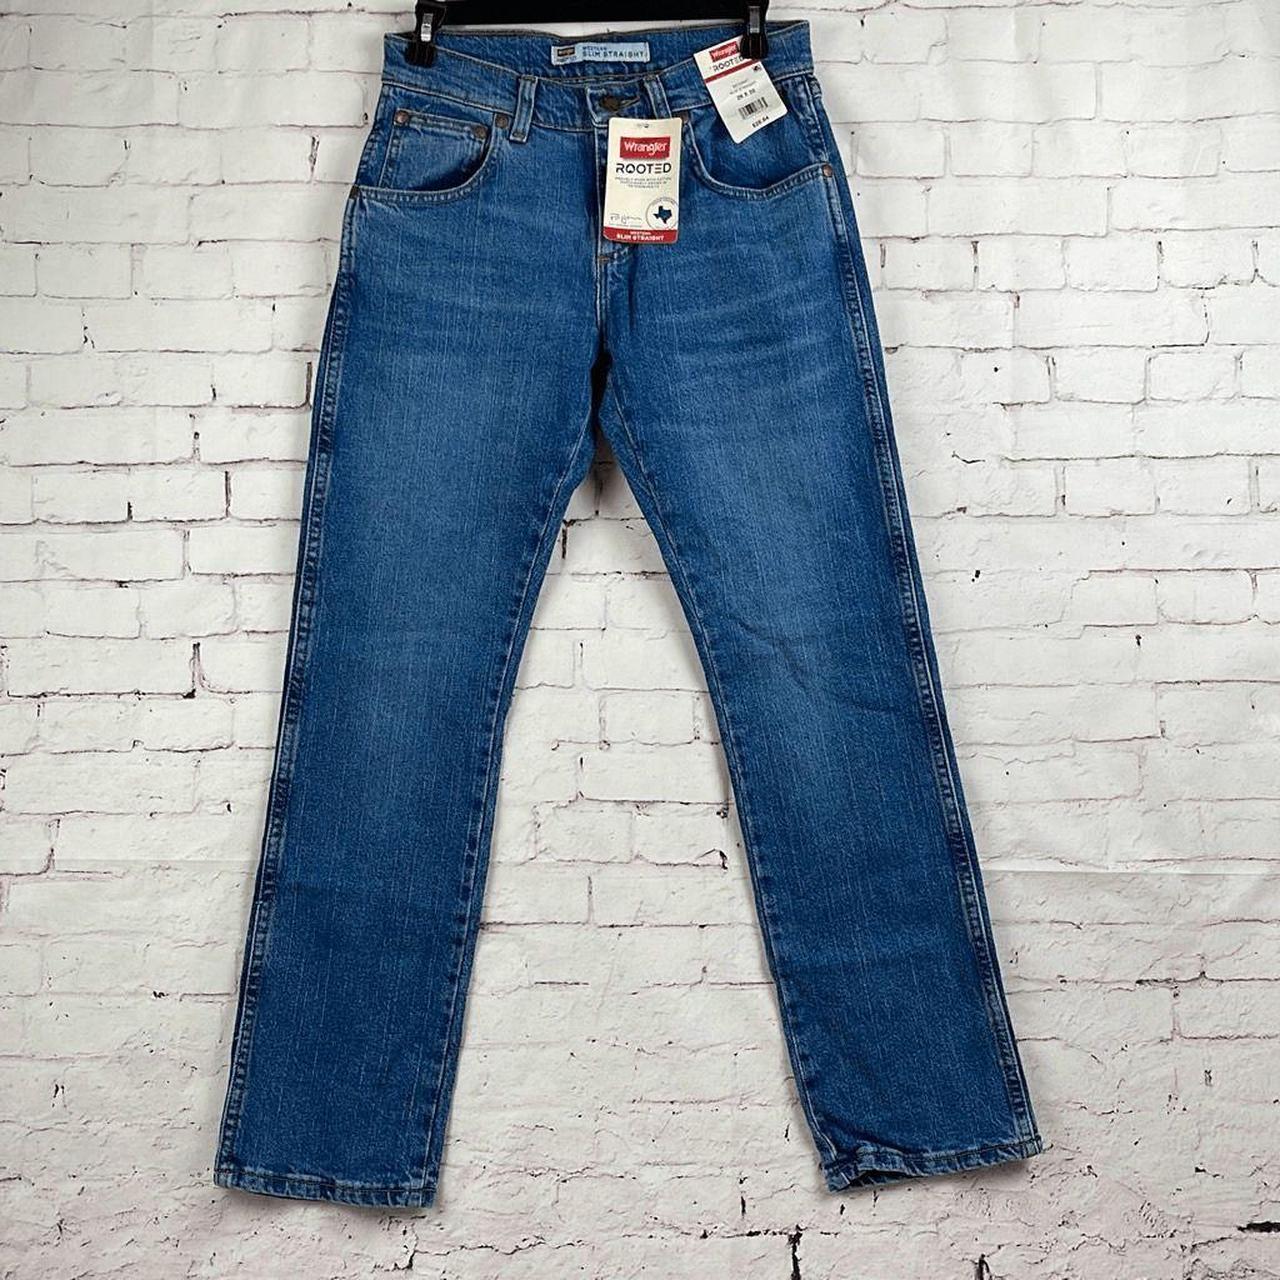 Wrangler Men's Rooted Slim Straight Jean 